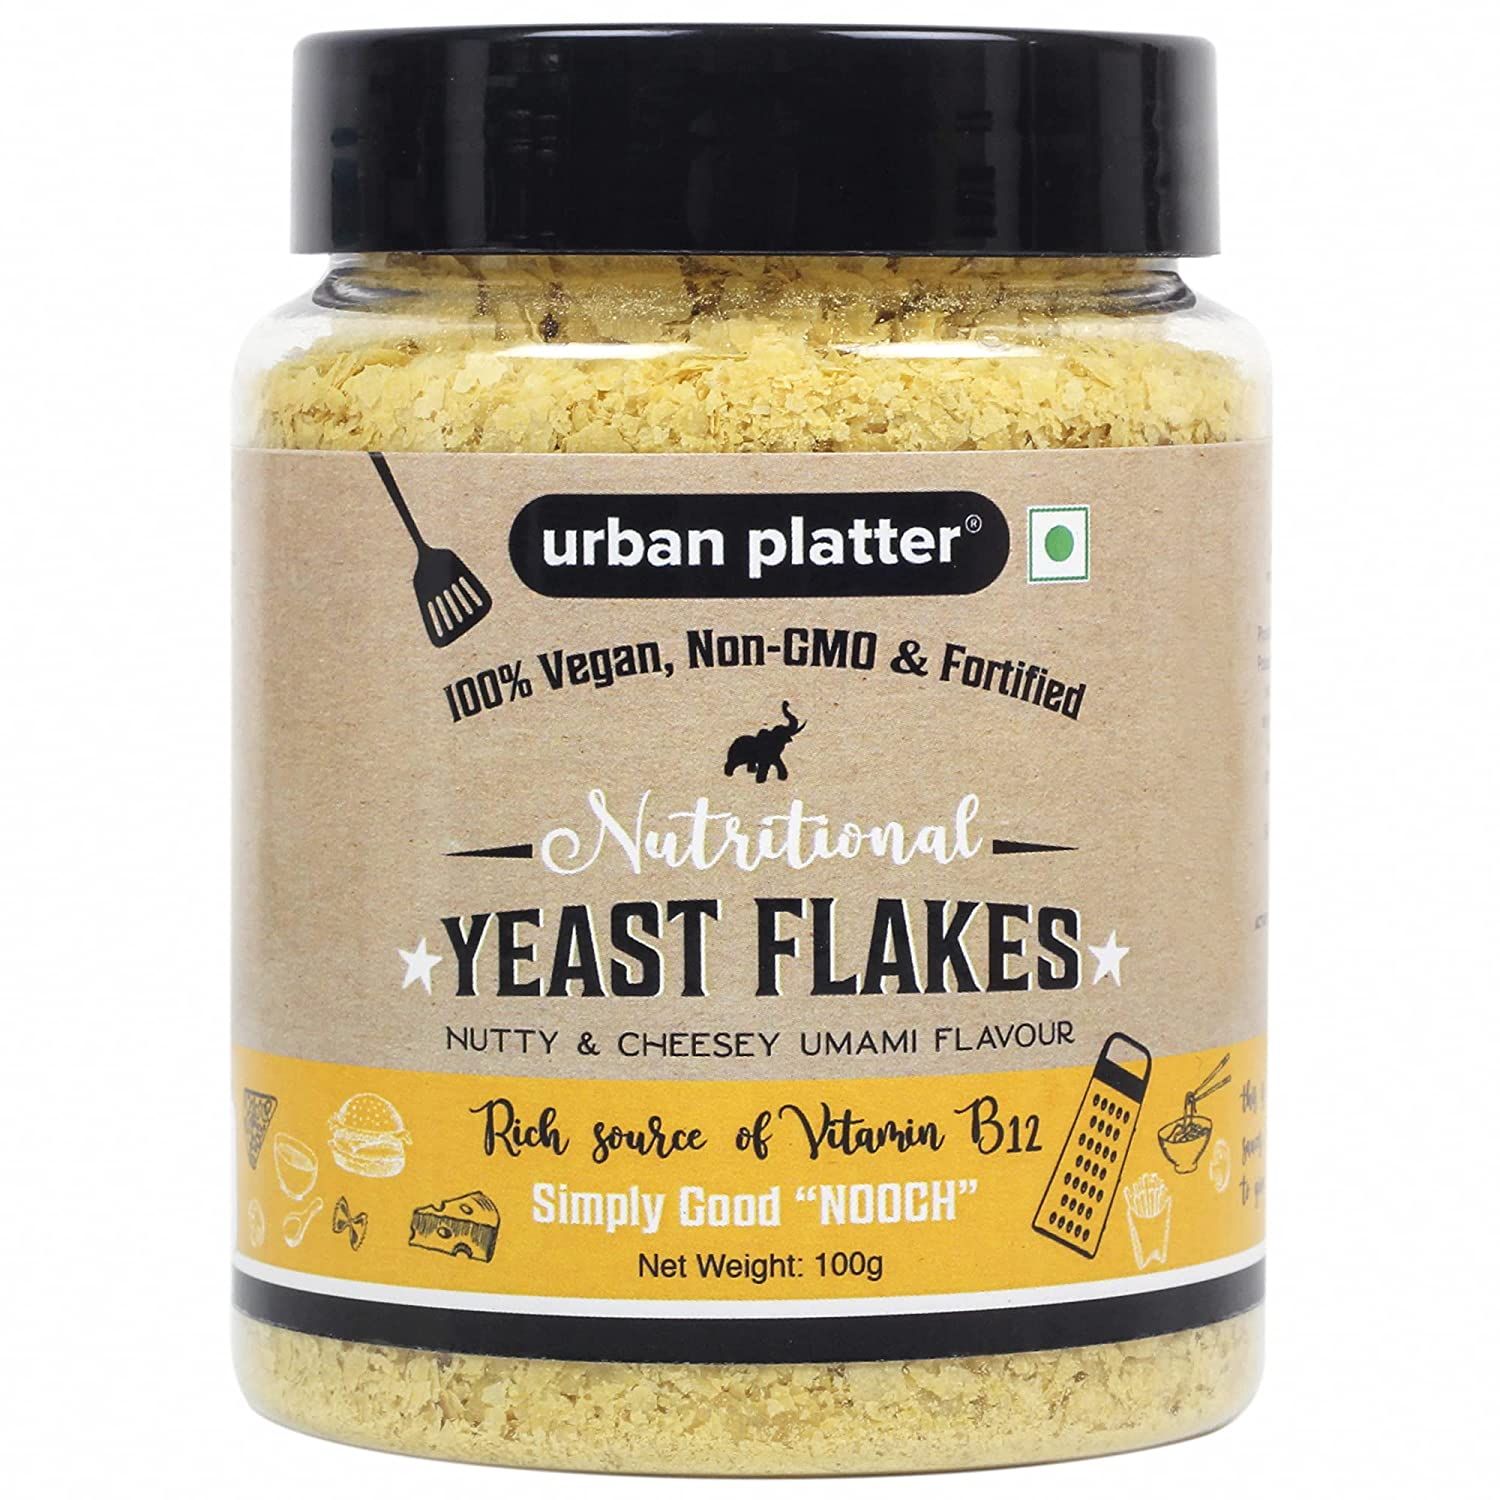 Urban Platter Nutritional Yeast Flakes Image